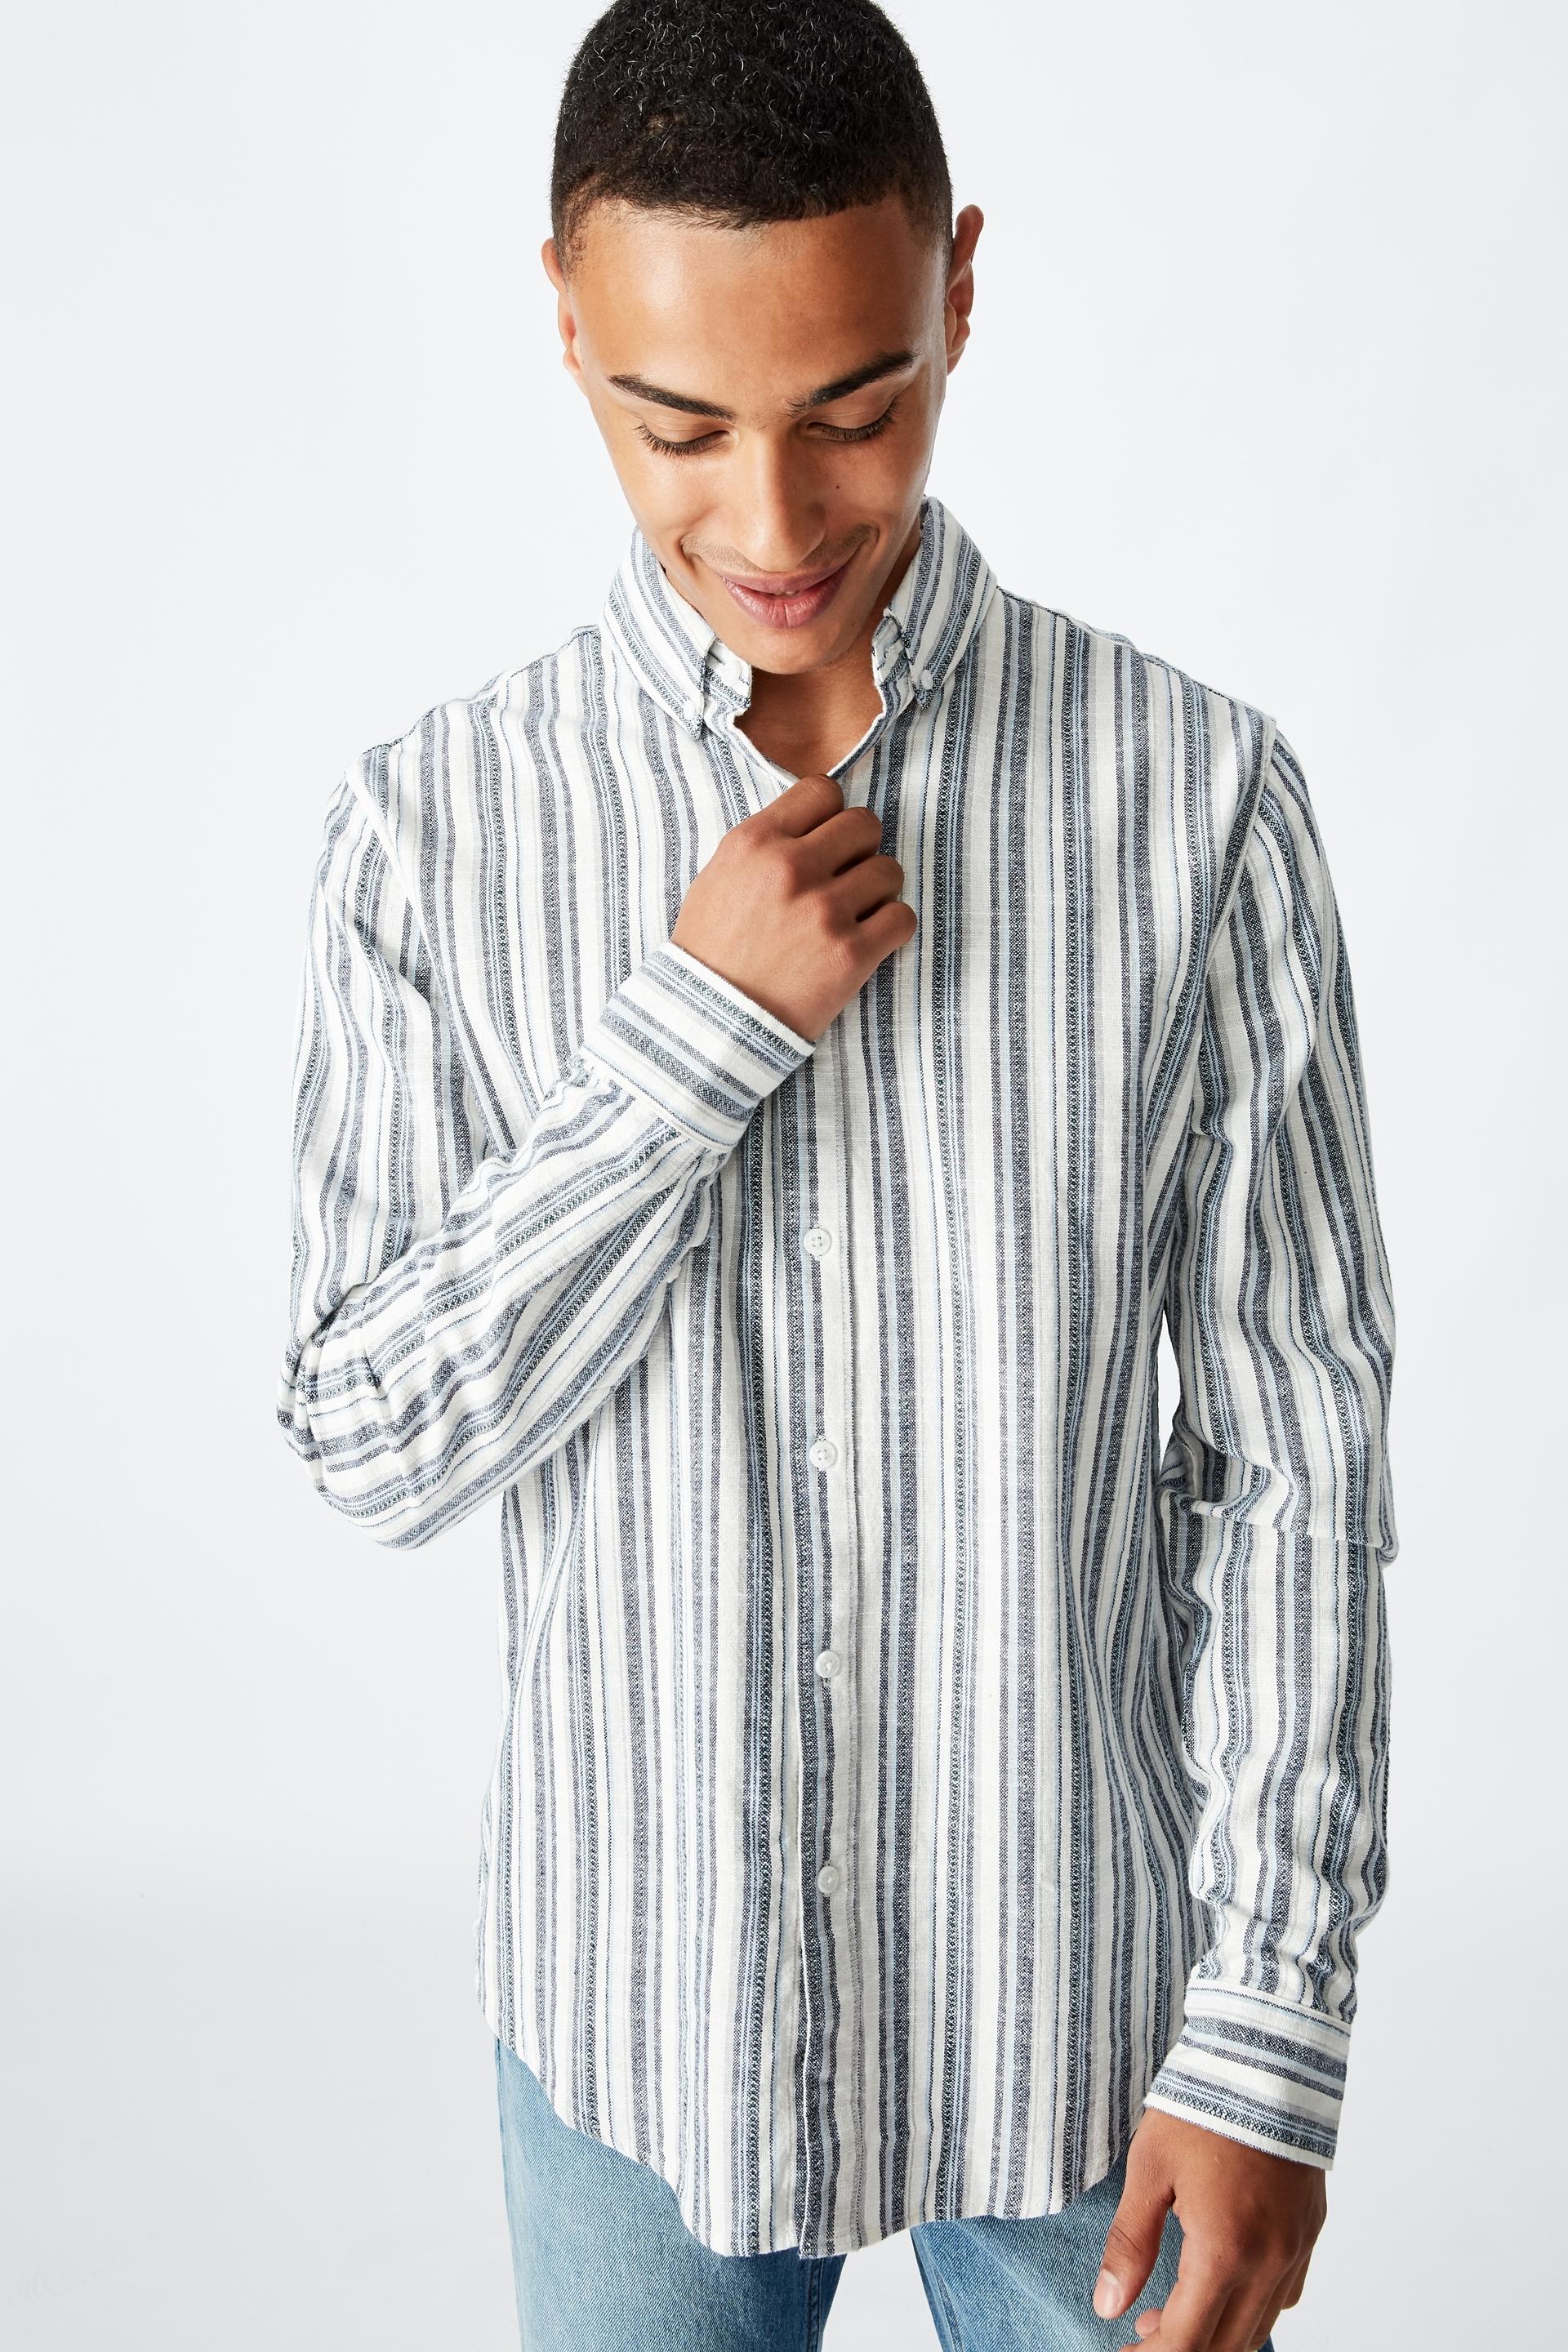 Textured long sleeve shirt - blue stripe Cotton On Shirts | Superbalist.com